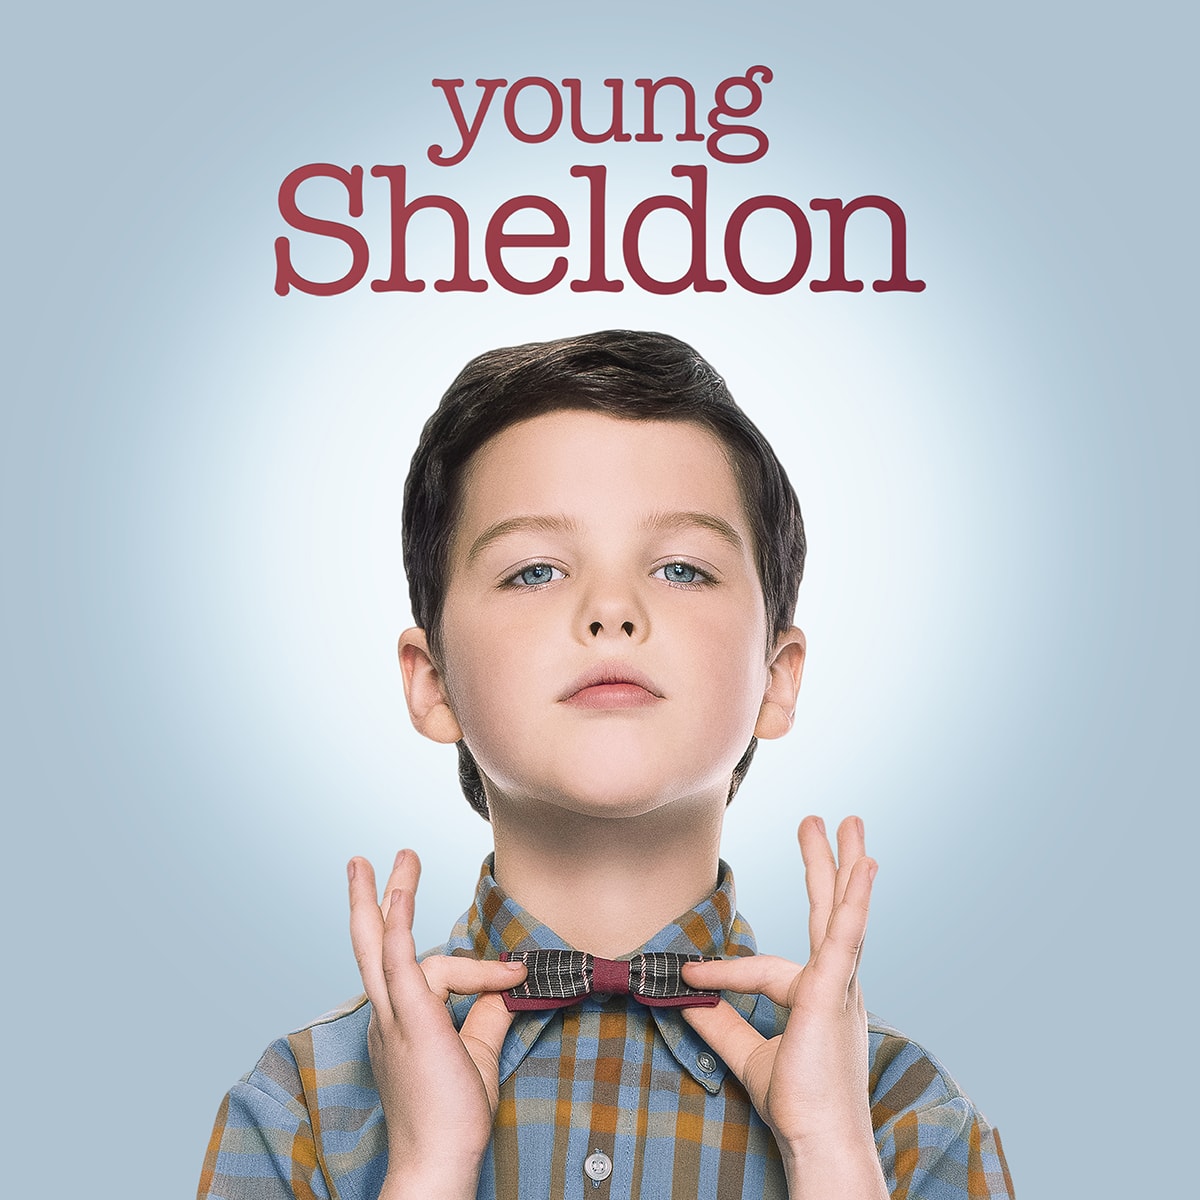 Young-Sheldon-CBS-TV-comedy-series-artwork-The-Big-Bang-Theory-prequel-spinoff.jpg